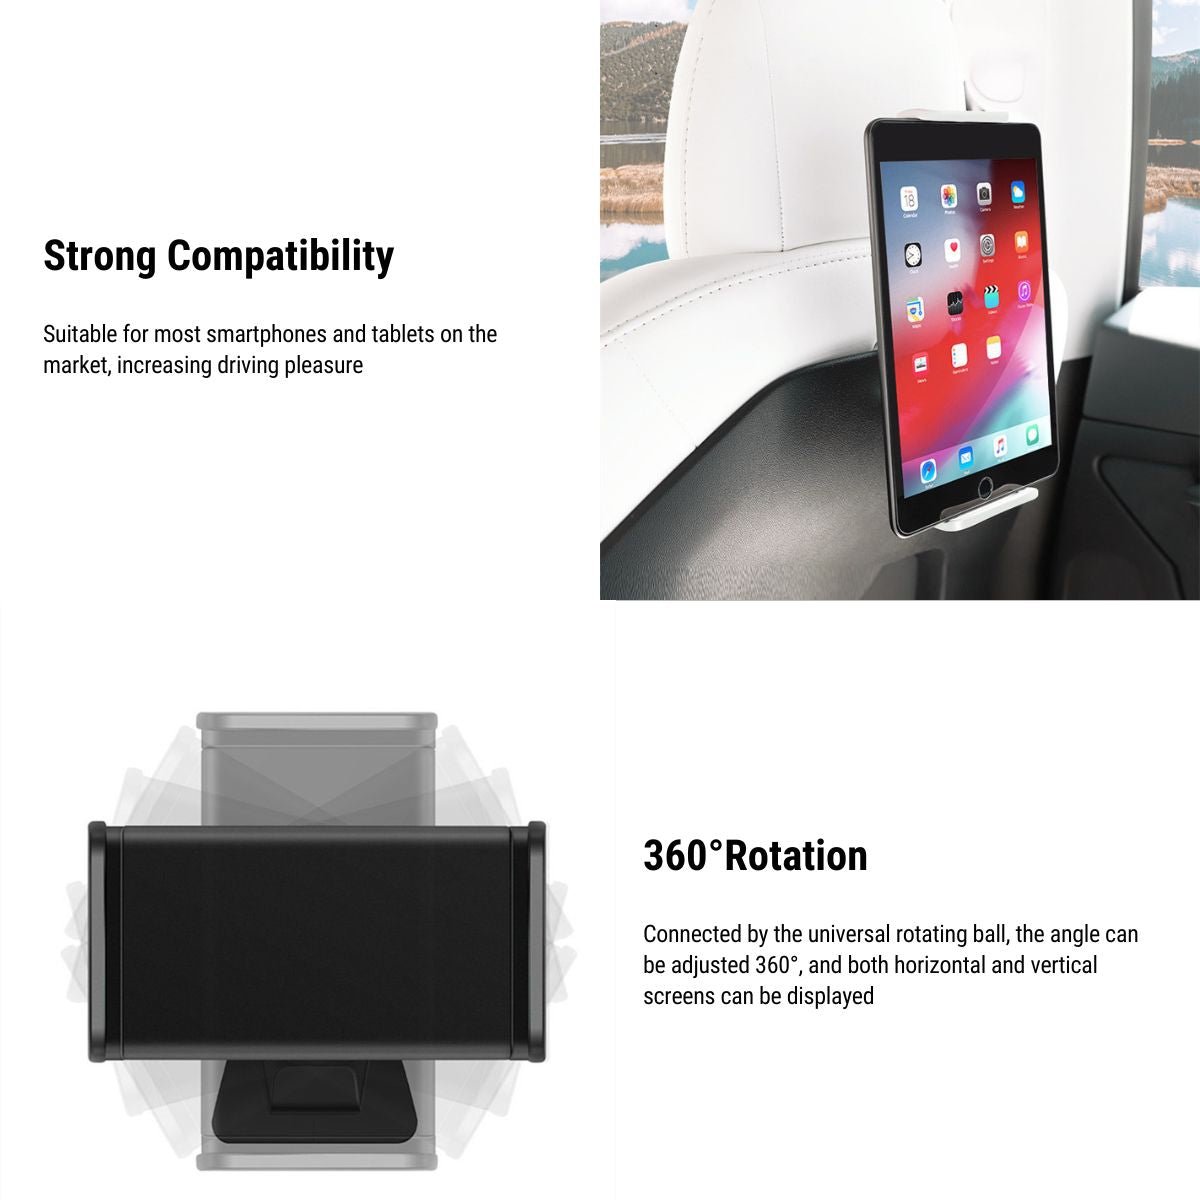 Headrest Ipad Phone Mount for Tesla Model 3 2017-2023.10 & Model Y 2020-2024 - Tesery Official Store